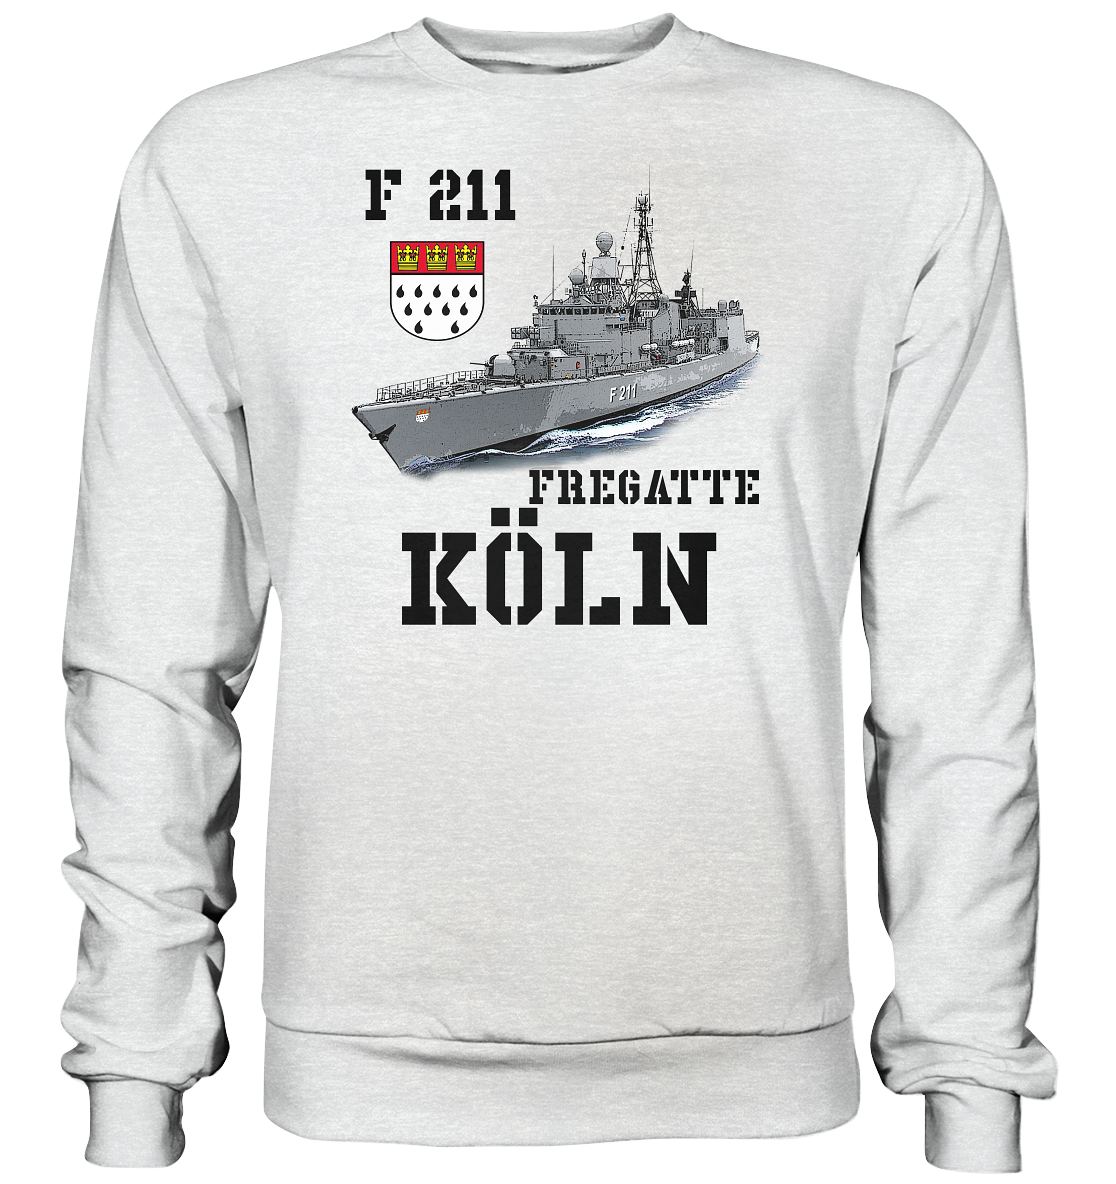 F211 Fregatte KÖLN - Premium Sweatshirt